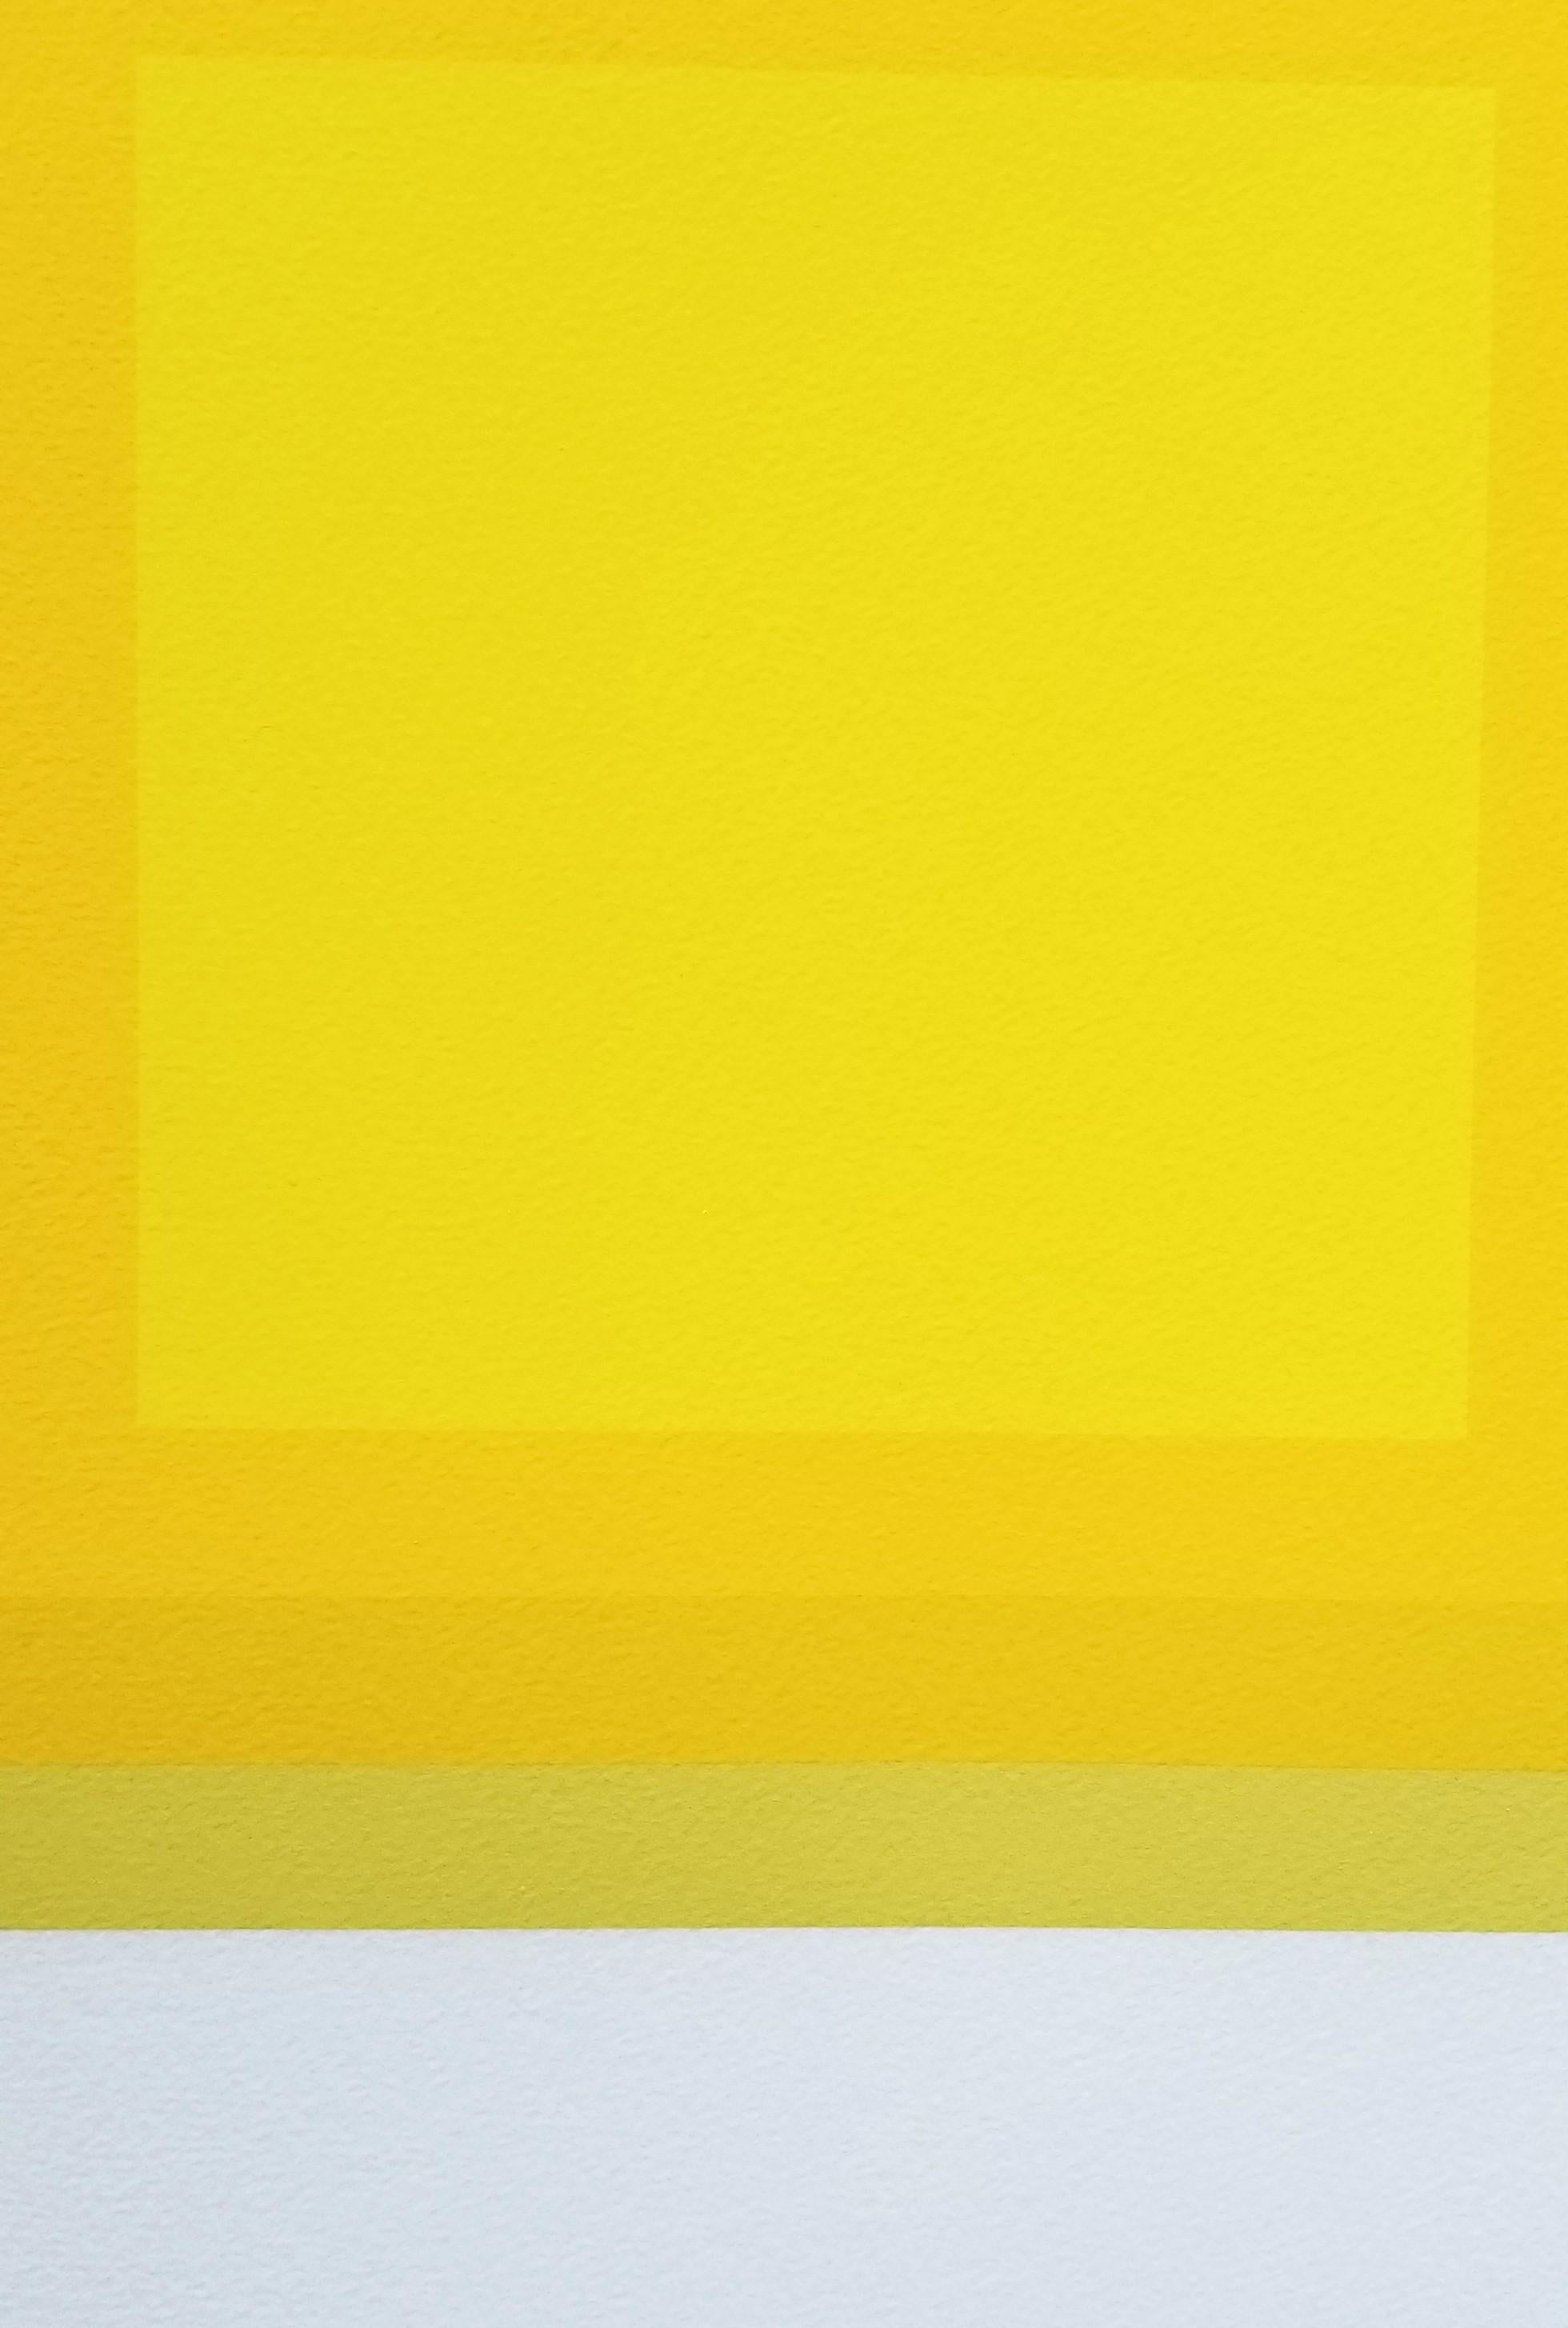 EK Ic /// Bauhaus Abstract Geometric Josef Albers Minimalism Yellow Screenprint 5